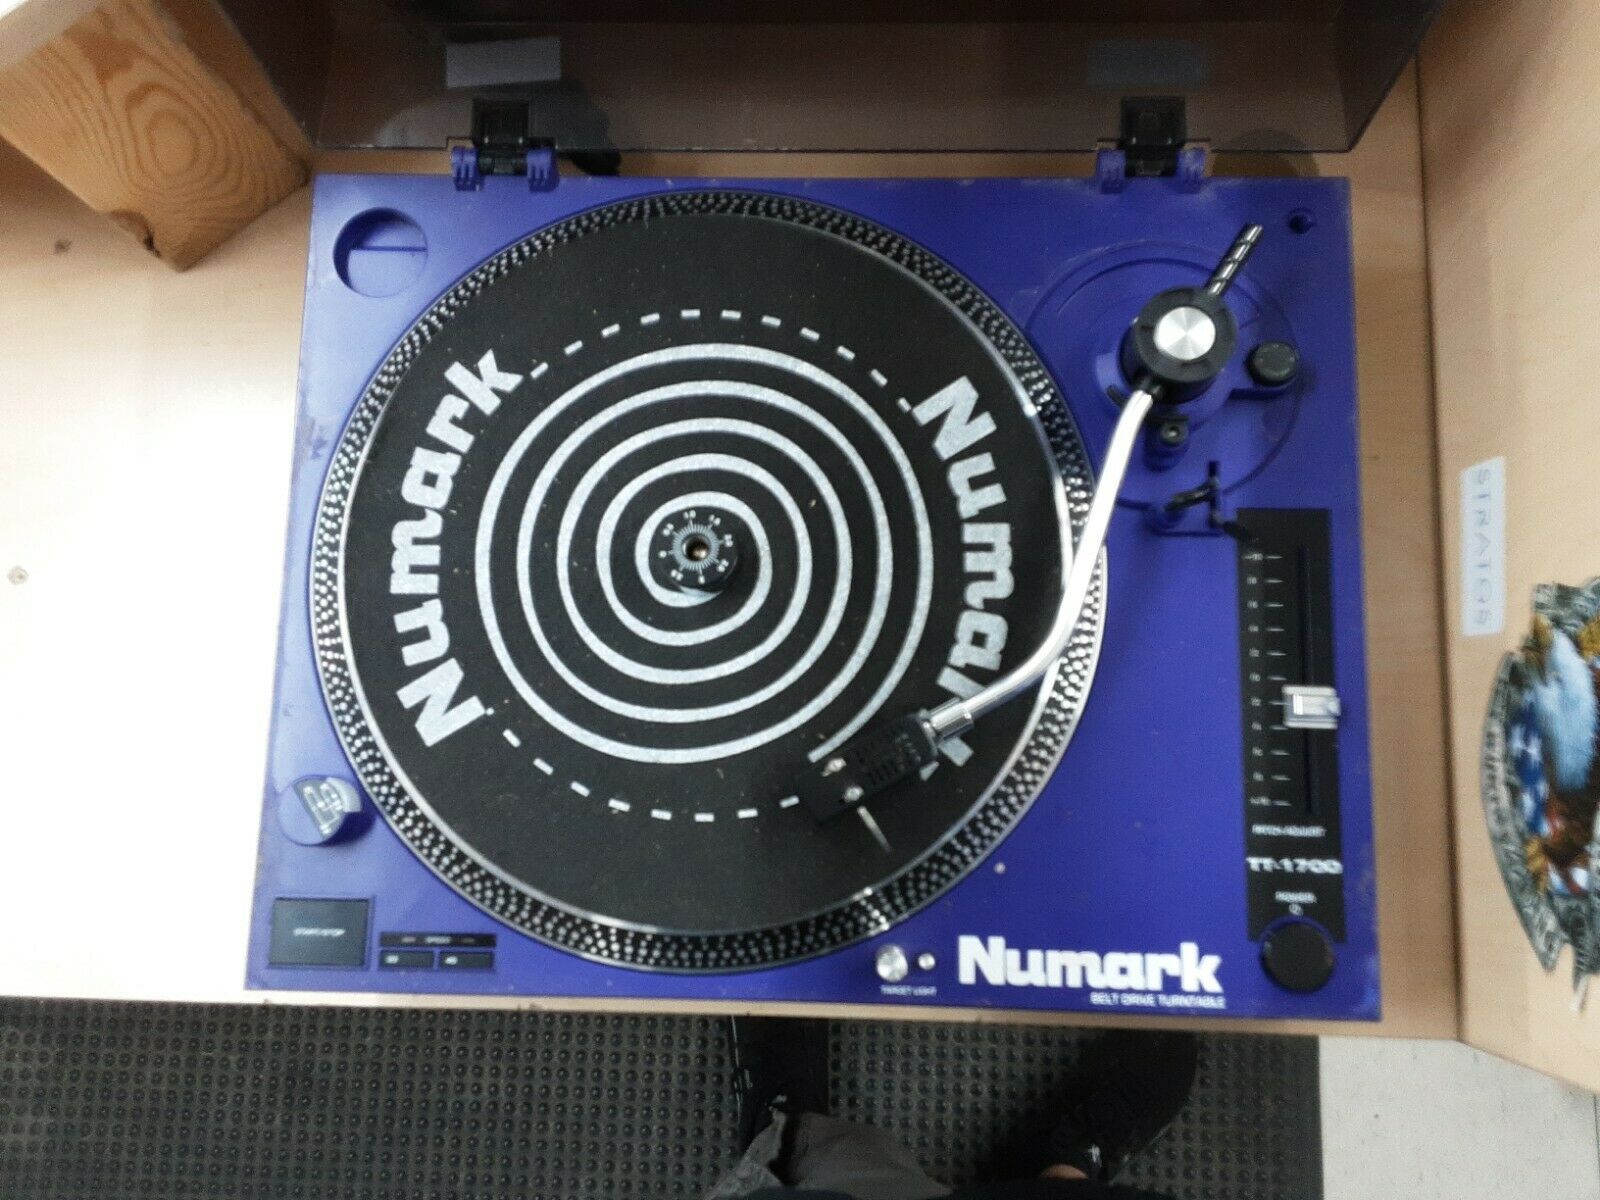 Numark Tt-1700 Belt Drive Studio Turntable With Pitch Adjust